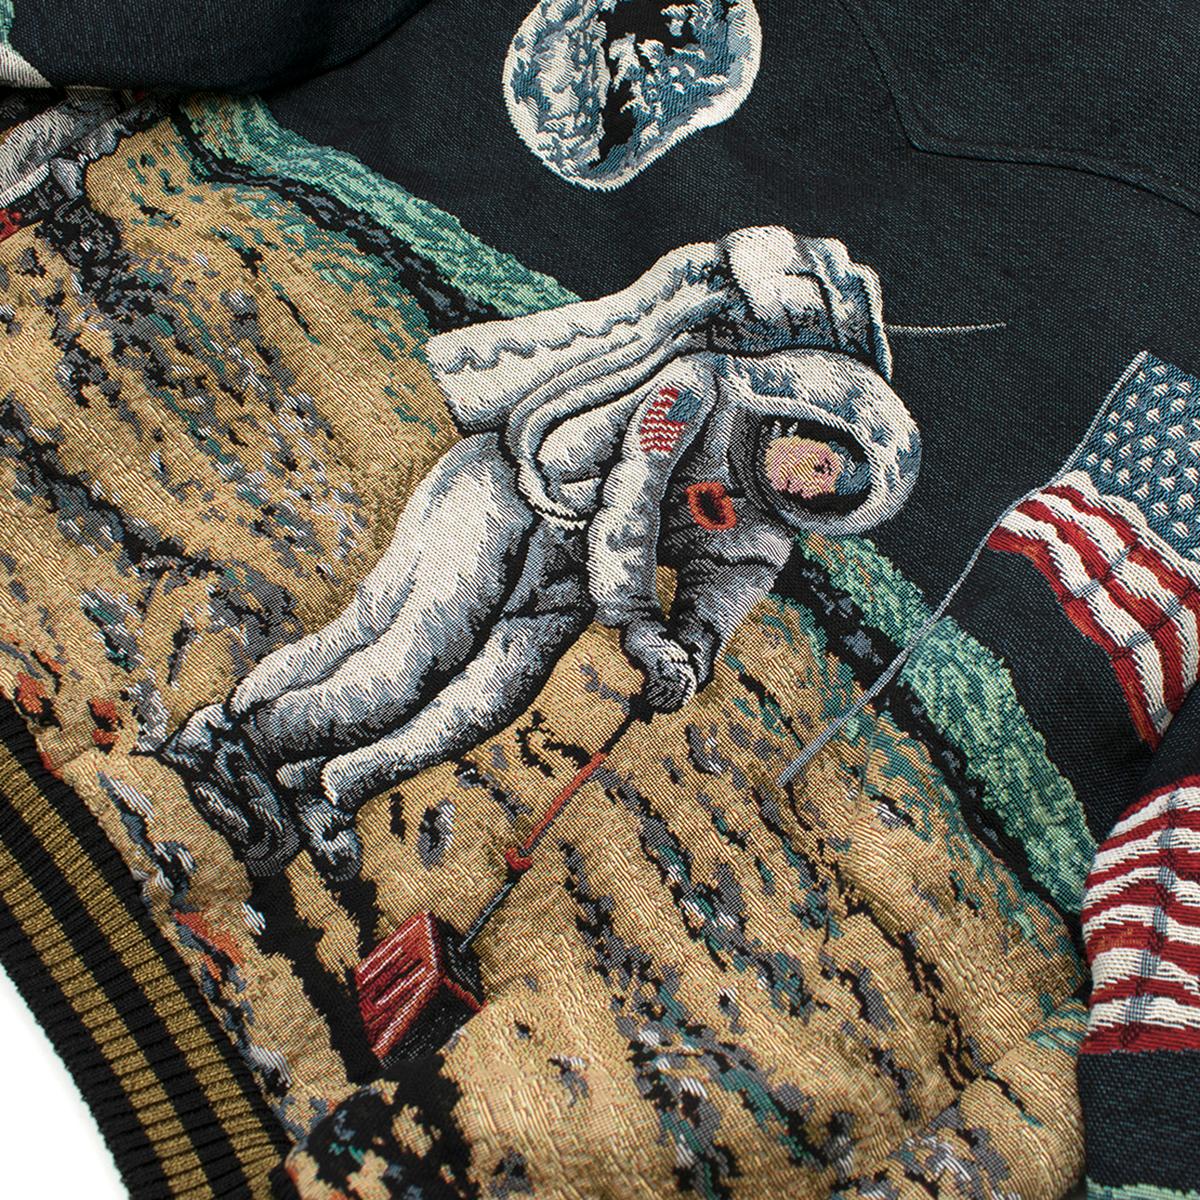 Saint Laurent Moon Tapestry Bomber Jacket - Current Season estimated SIZE S 1